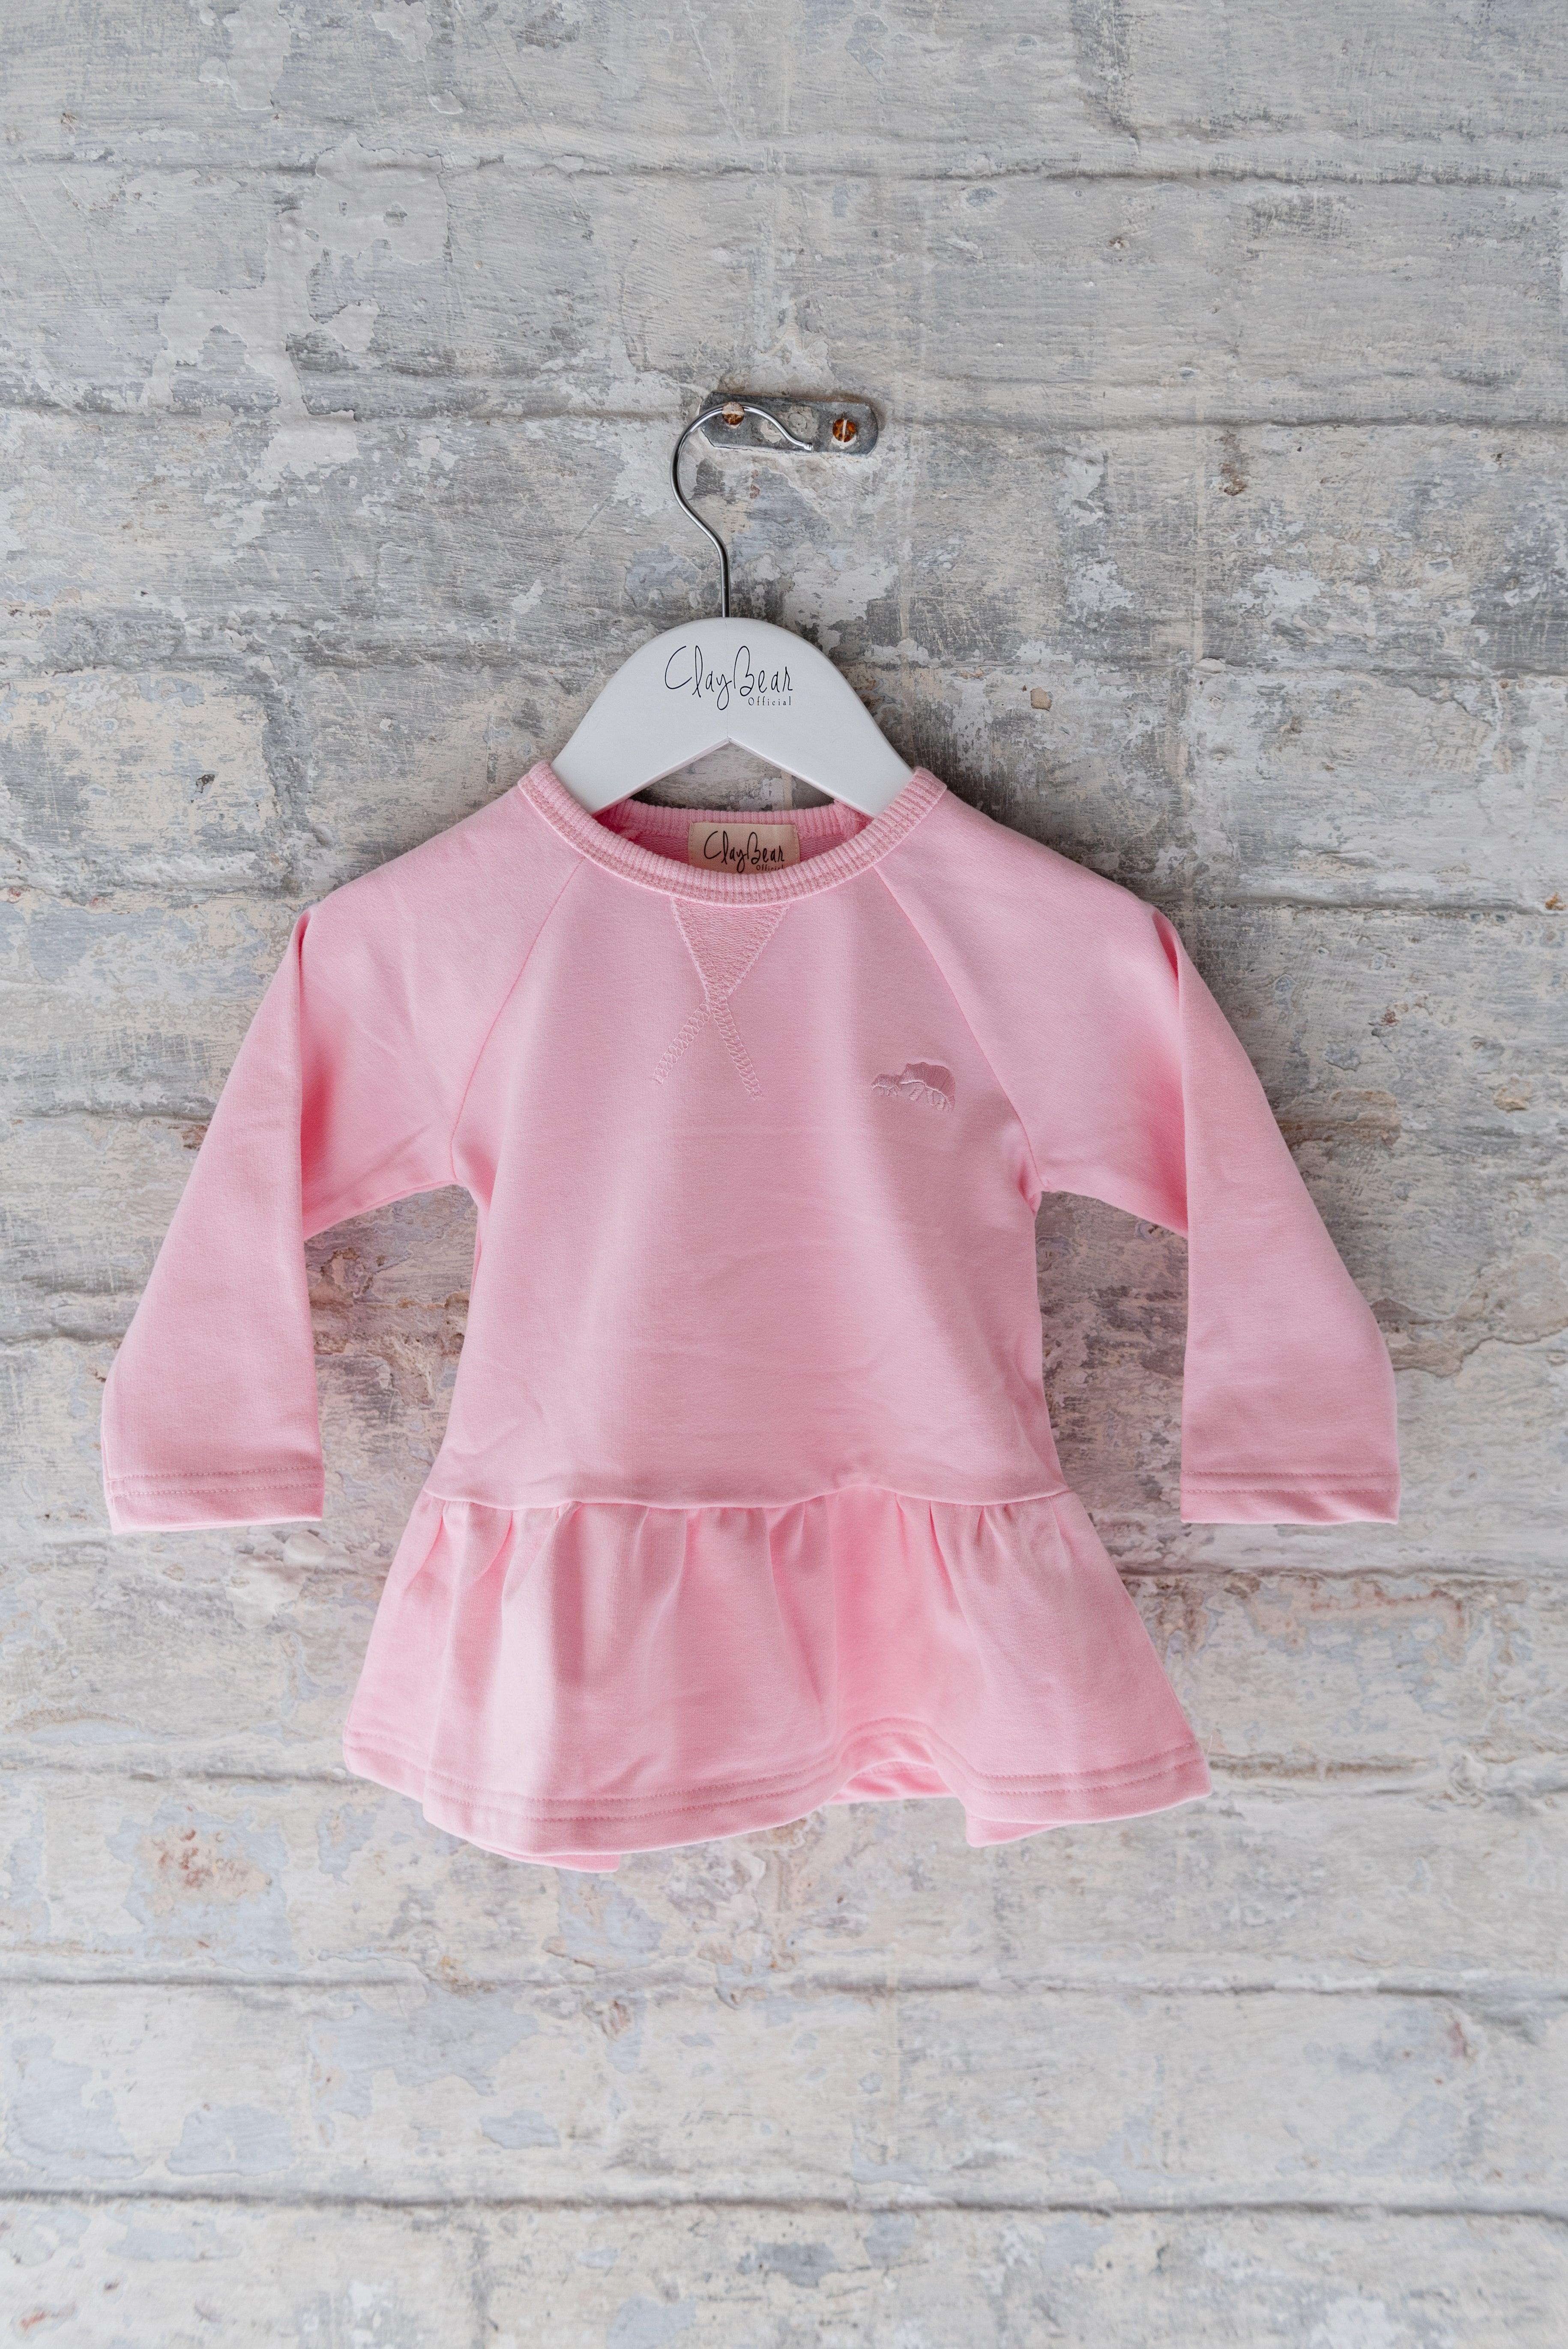 files/claybare-pink-sweatshirt-tunic-claybearofficial-1.jpg